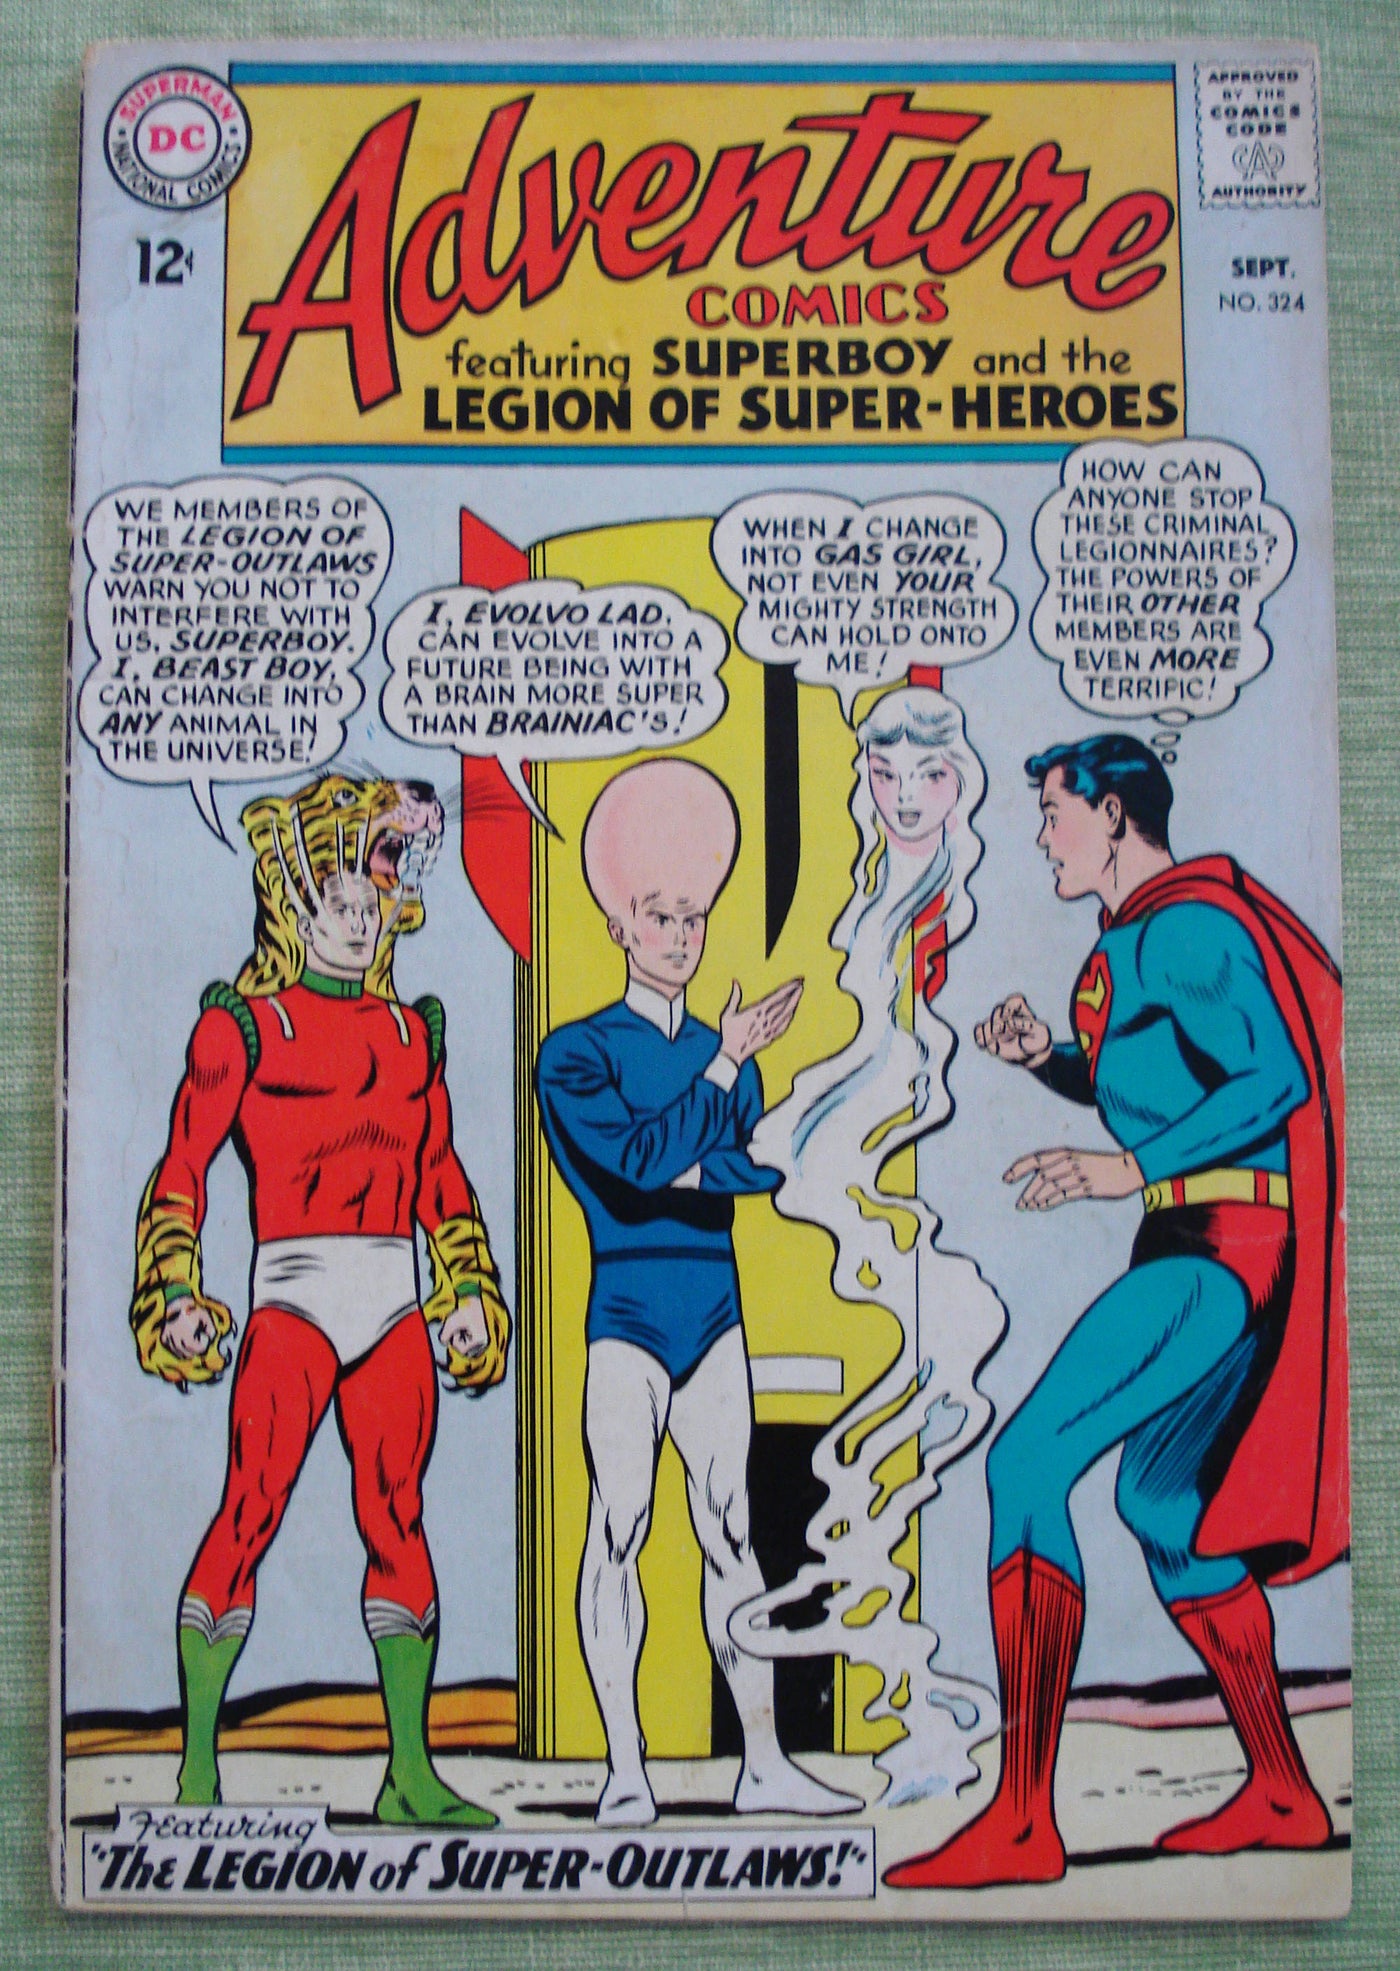 Adventure Comics #324 DC Comics September 1964